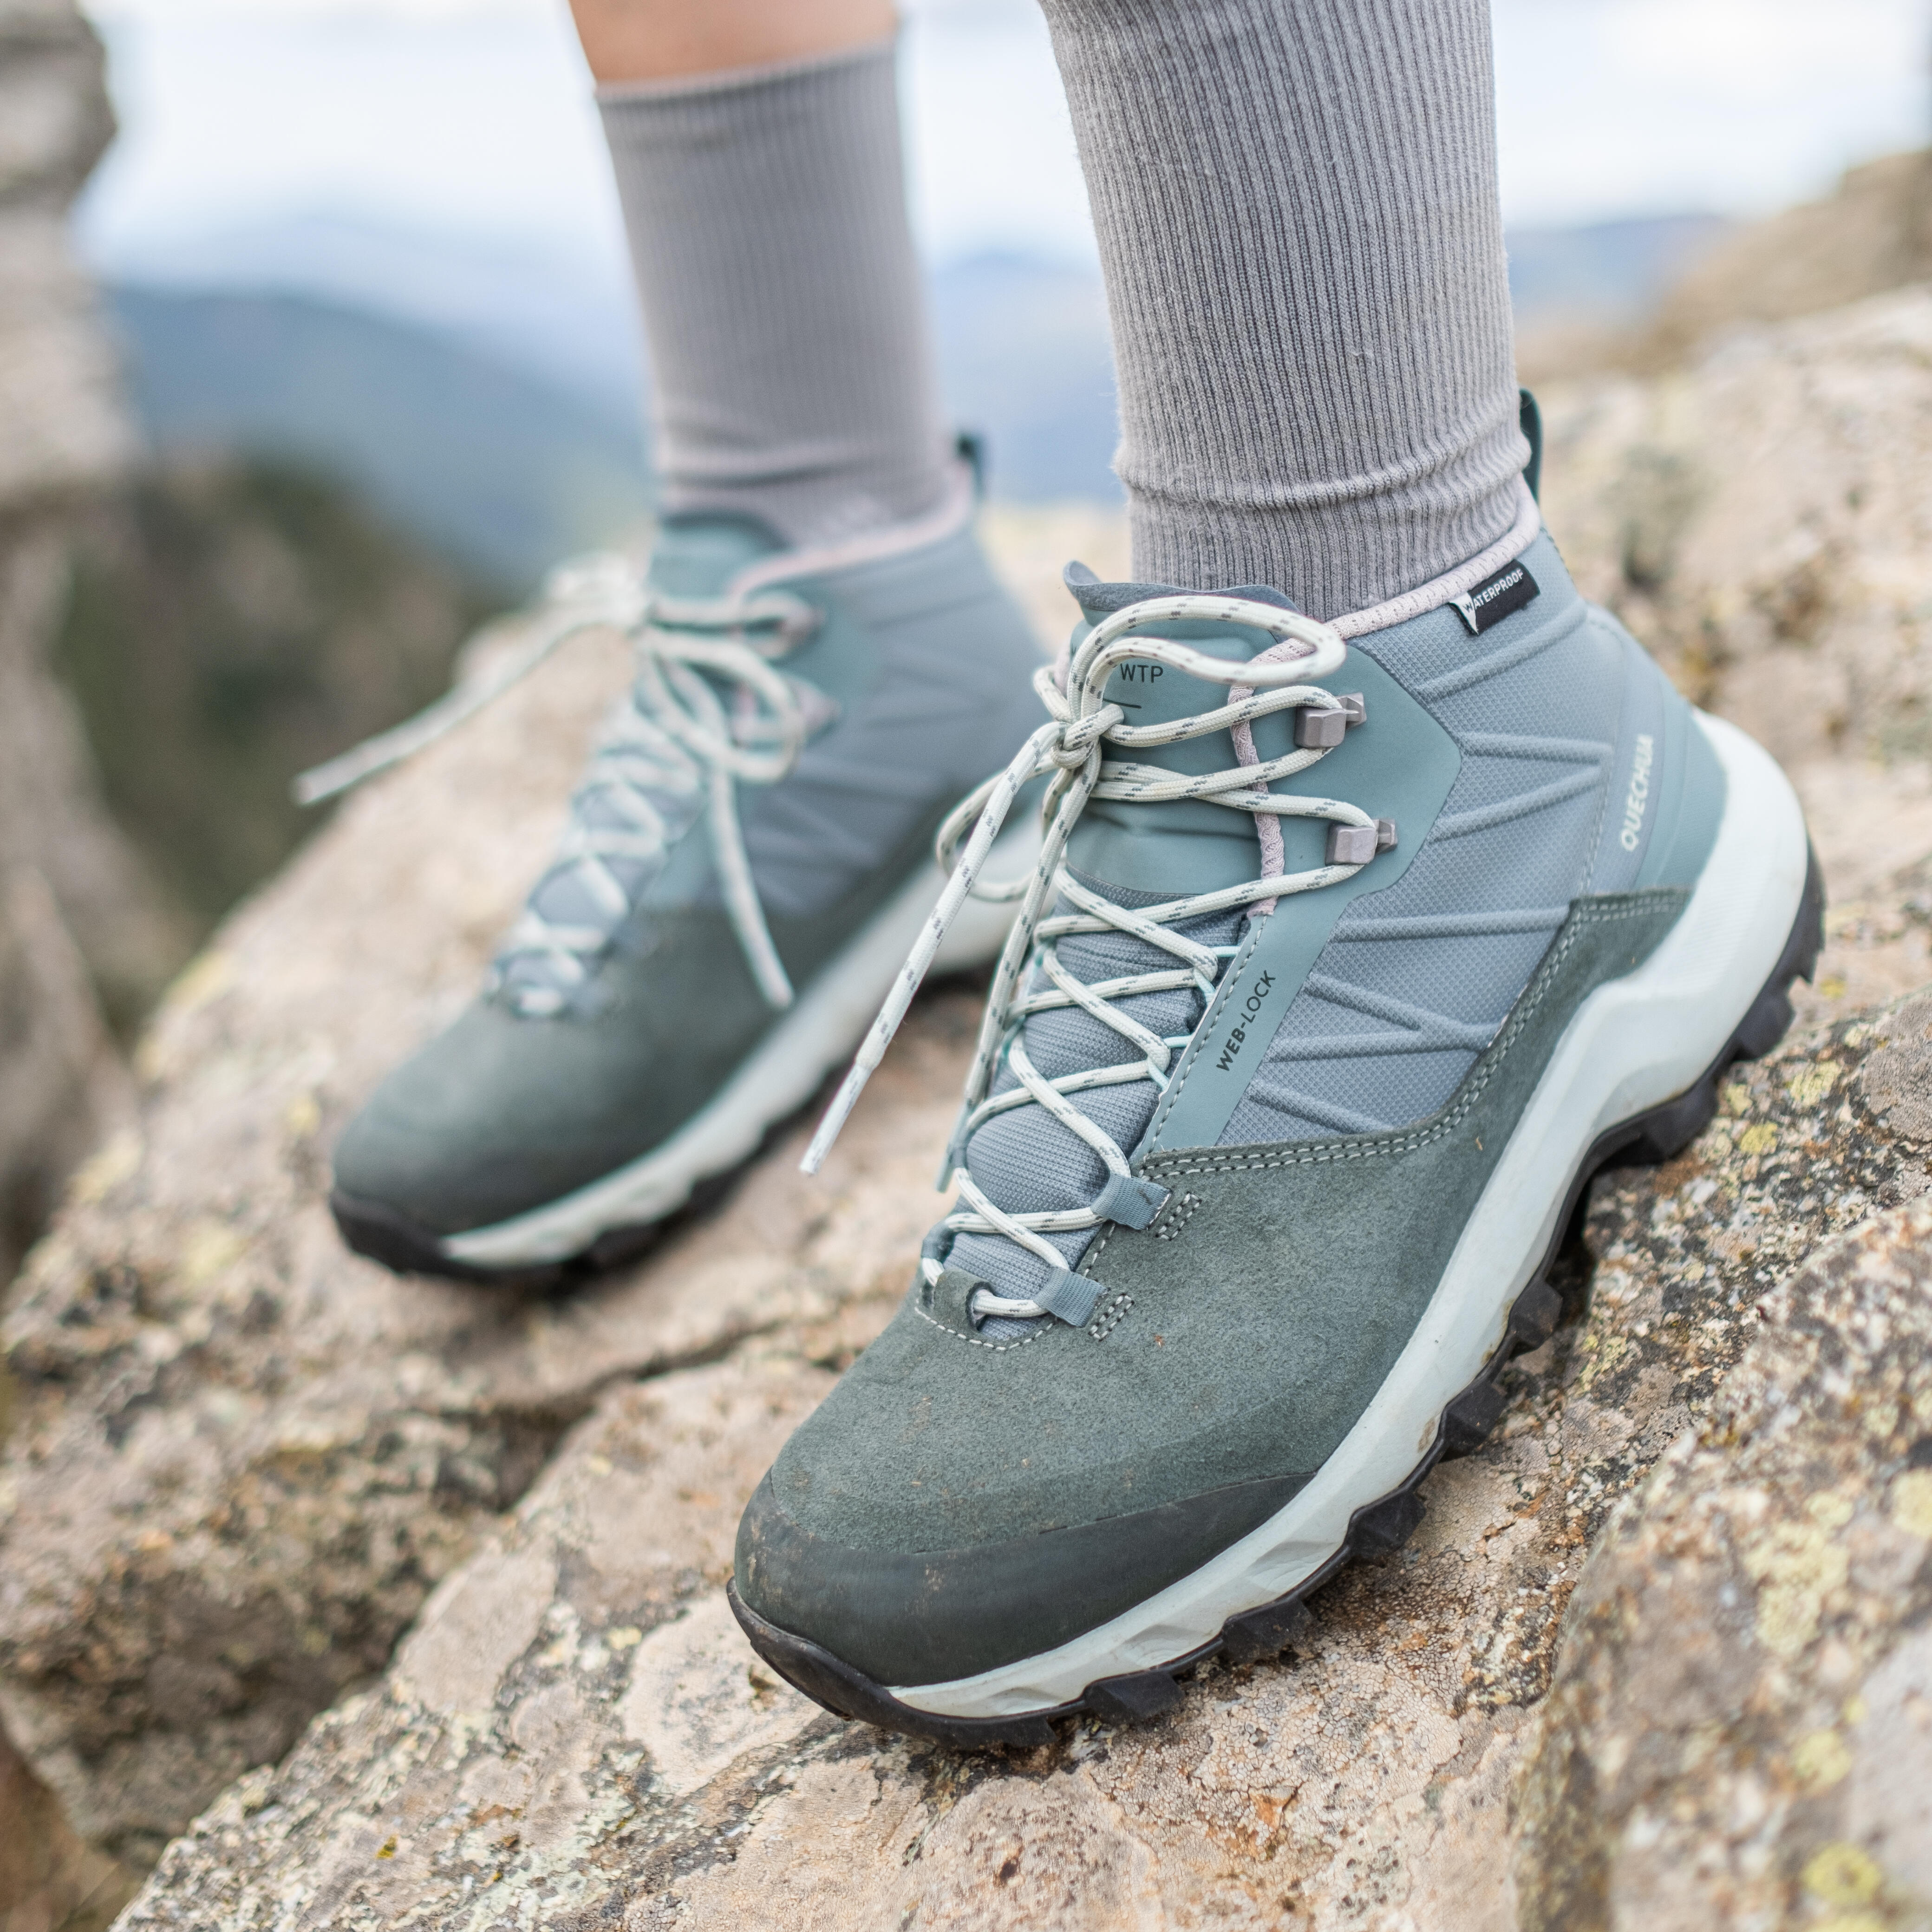 Women’s Waterproof Hiking Boots - MH 500 Green - QUECHUA